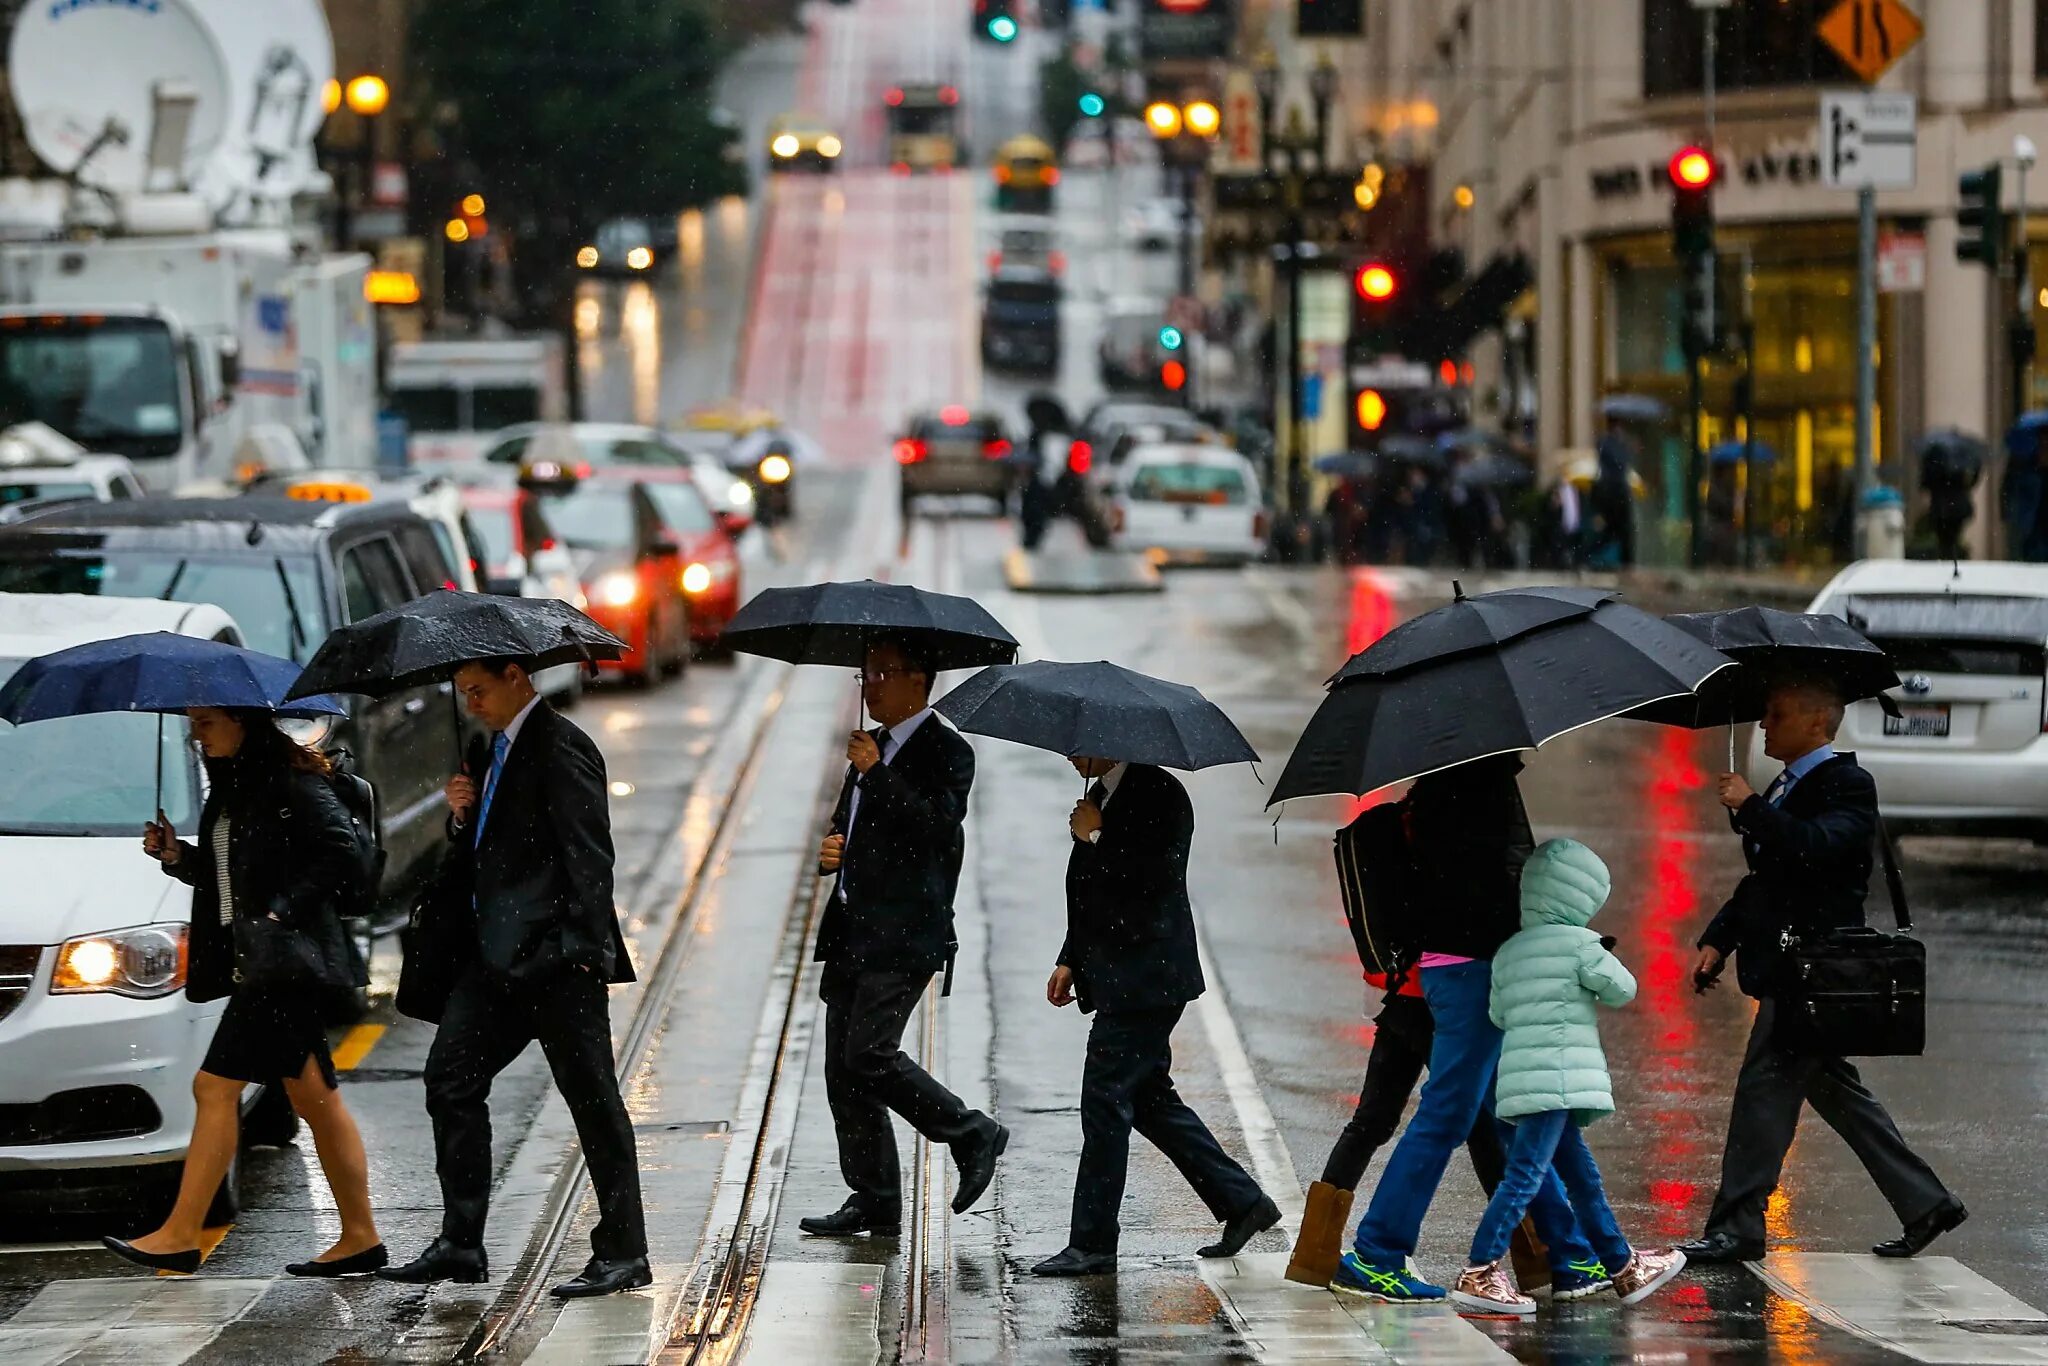 Сан Франциско дождь. Rainy weather. People Crossing Street. Плохая погода в Сан Франциско. You take an umbrella today